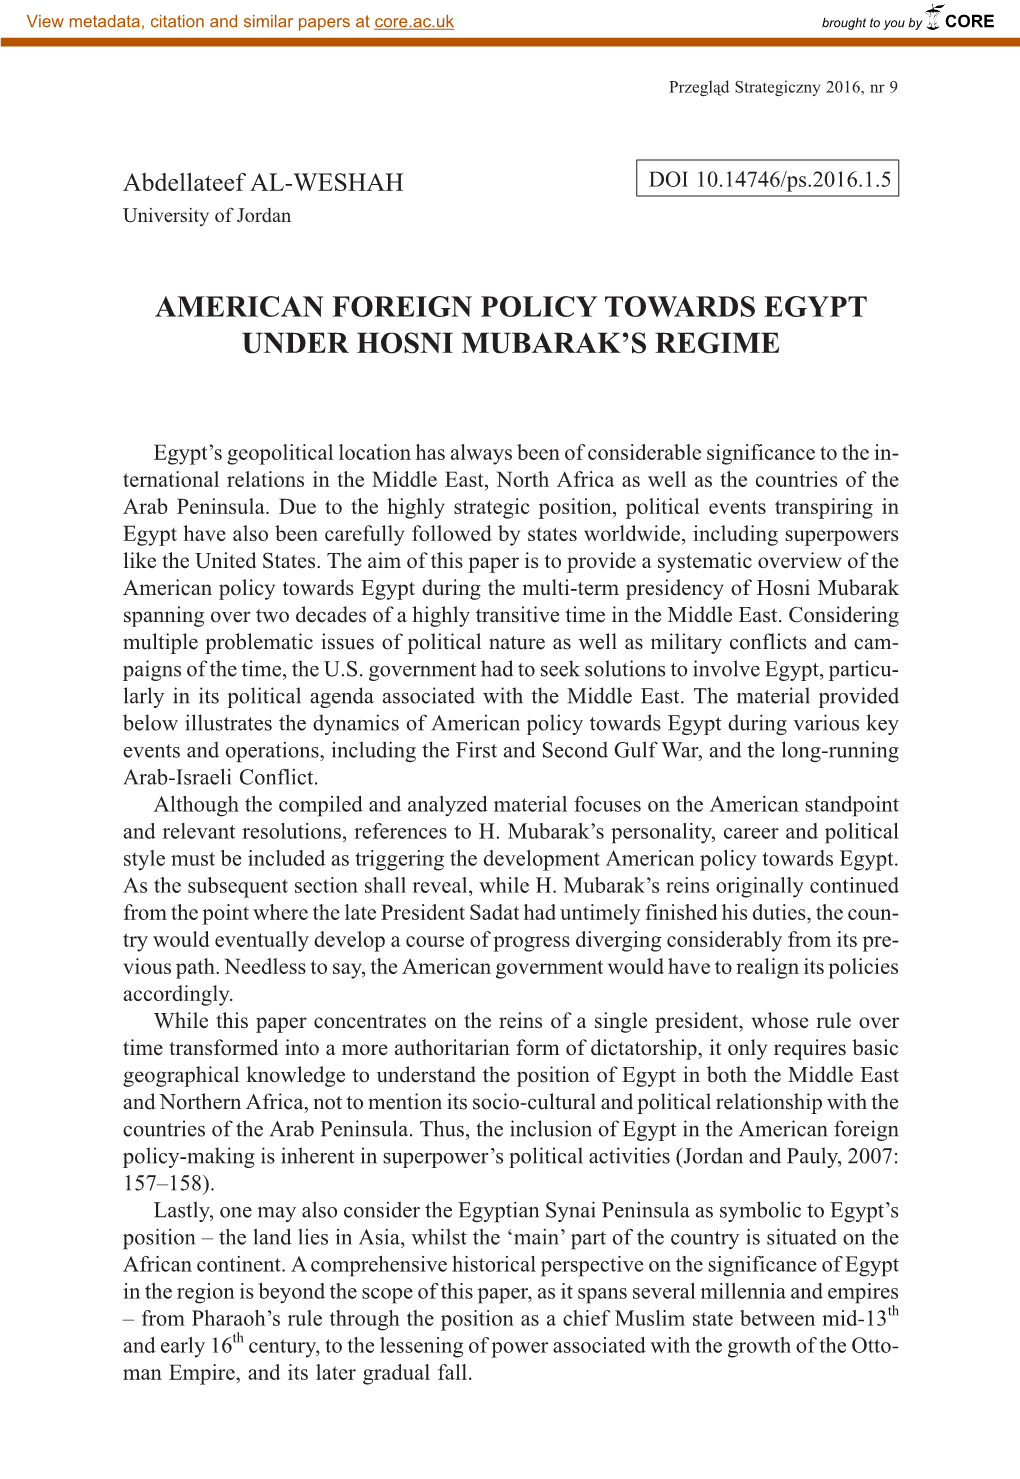 American Foreign Policy Towards Egypt Under Hosni Mubarak’S Regime